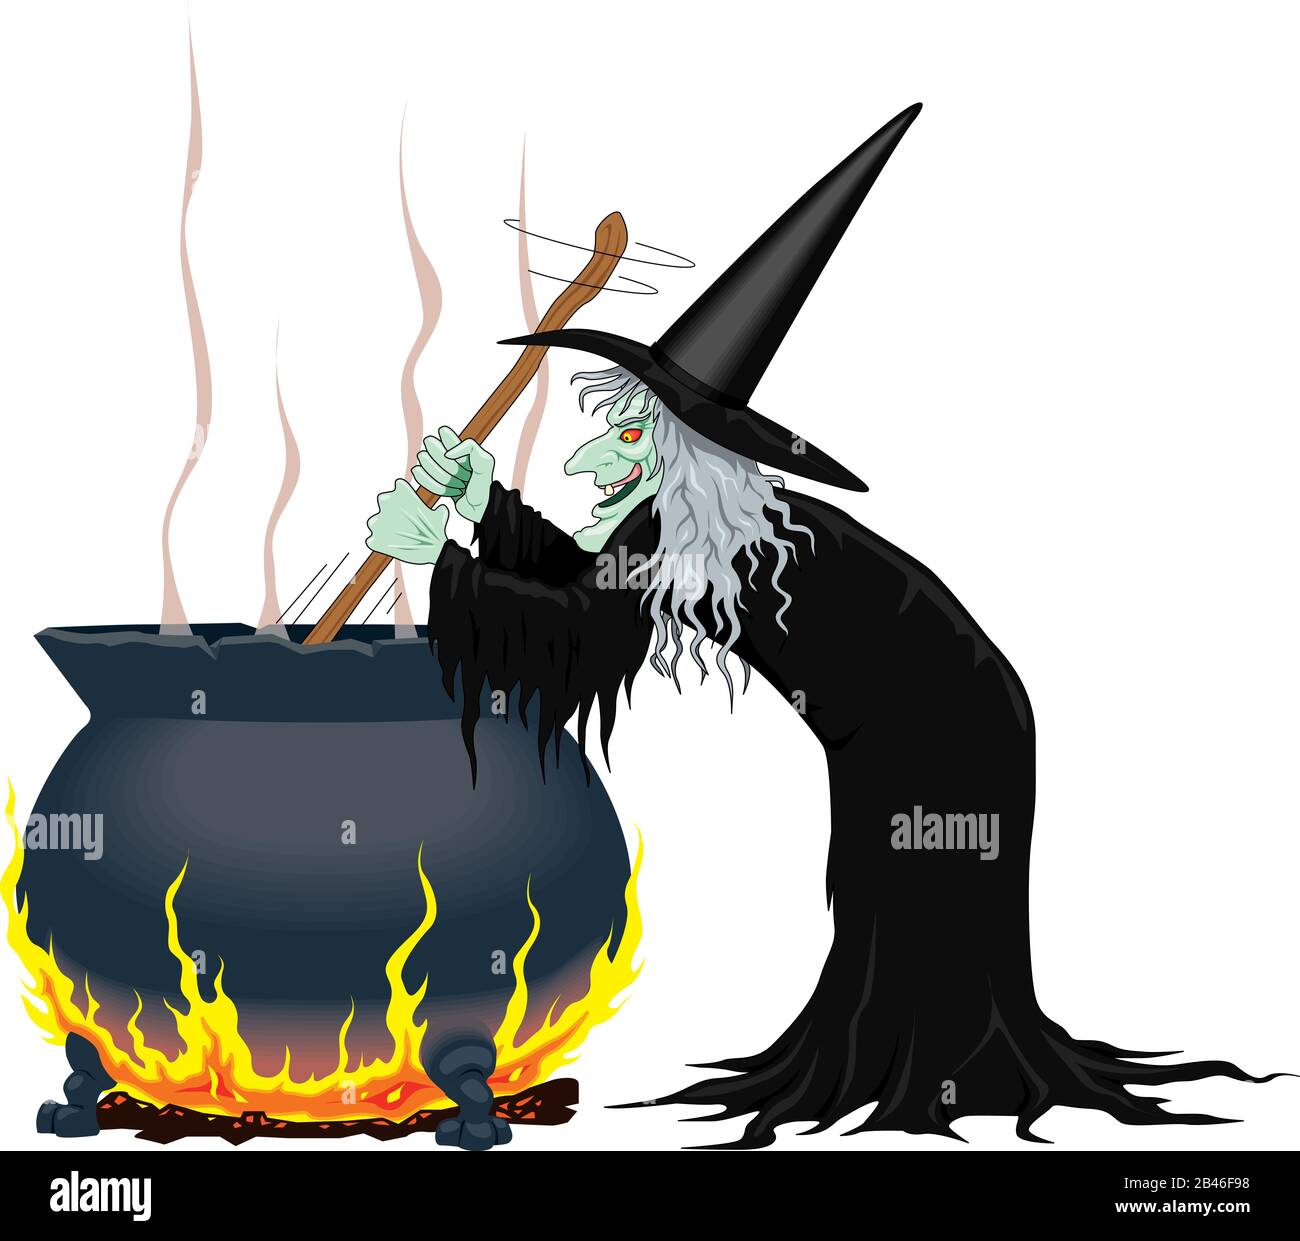 witches-cauldron-vector-cartoon-2B46F98.jpg